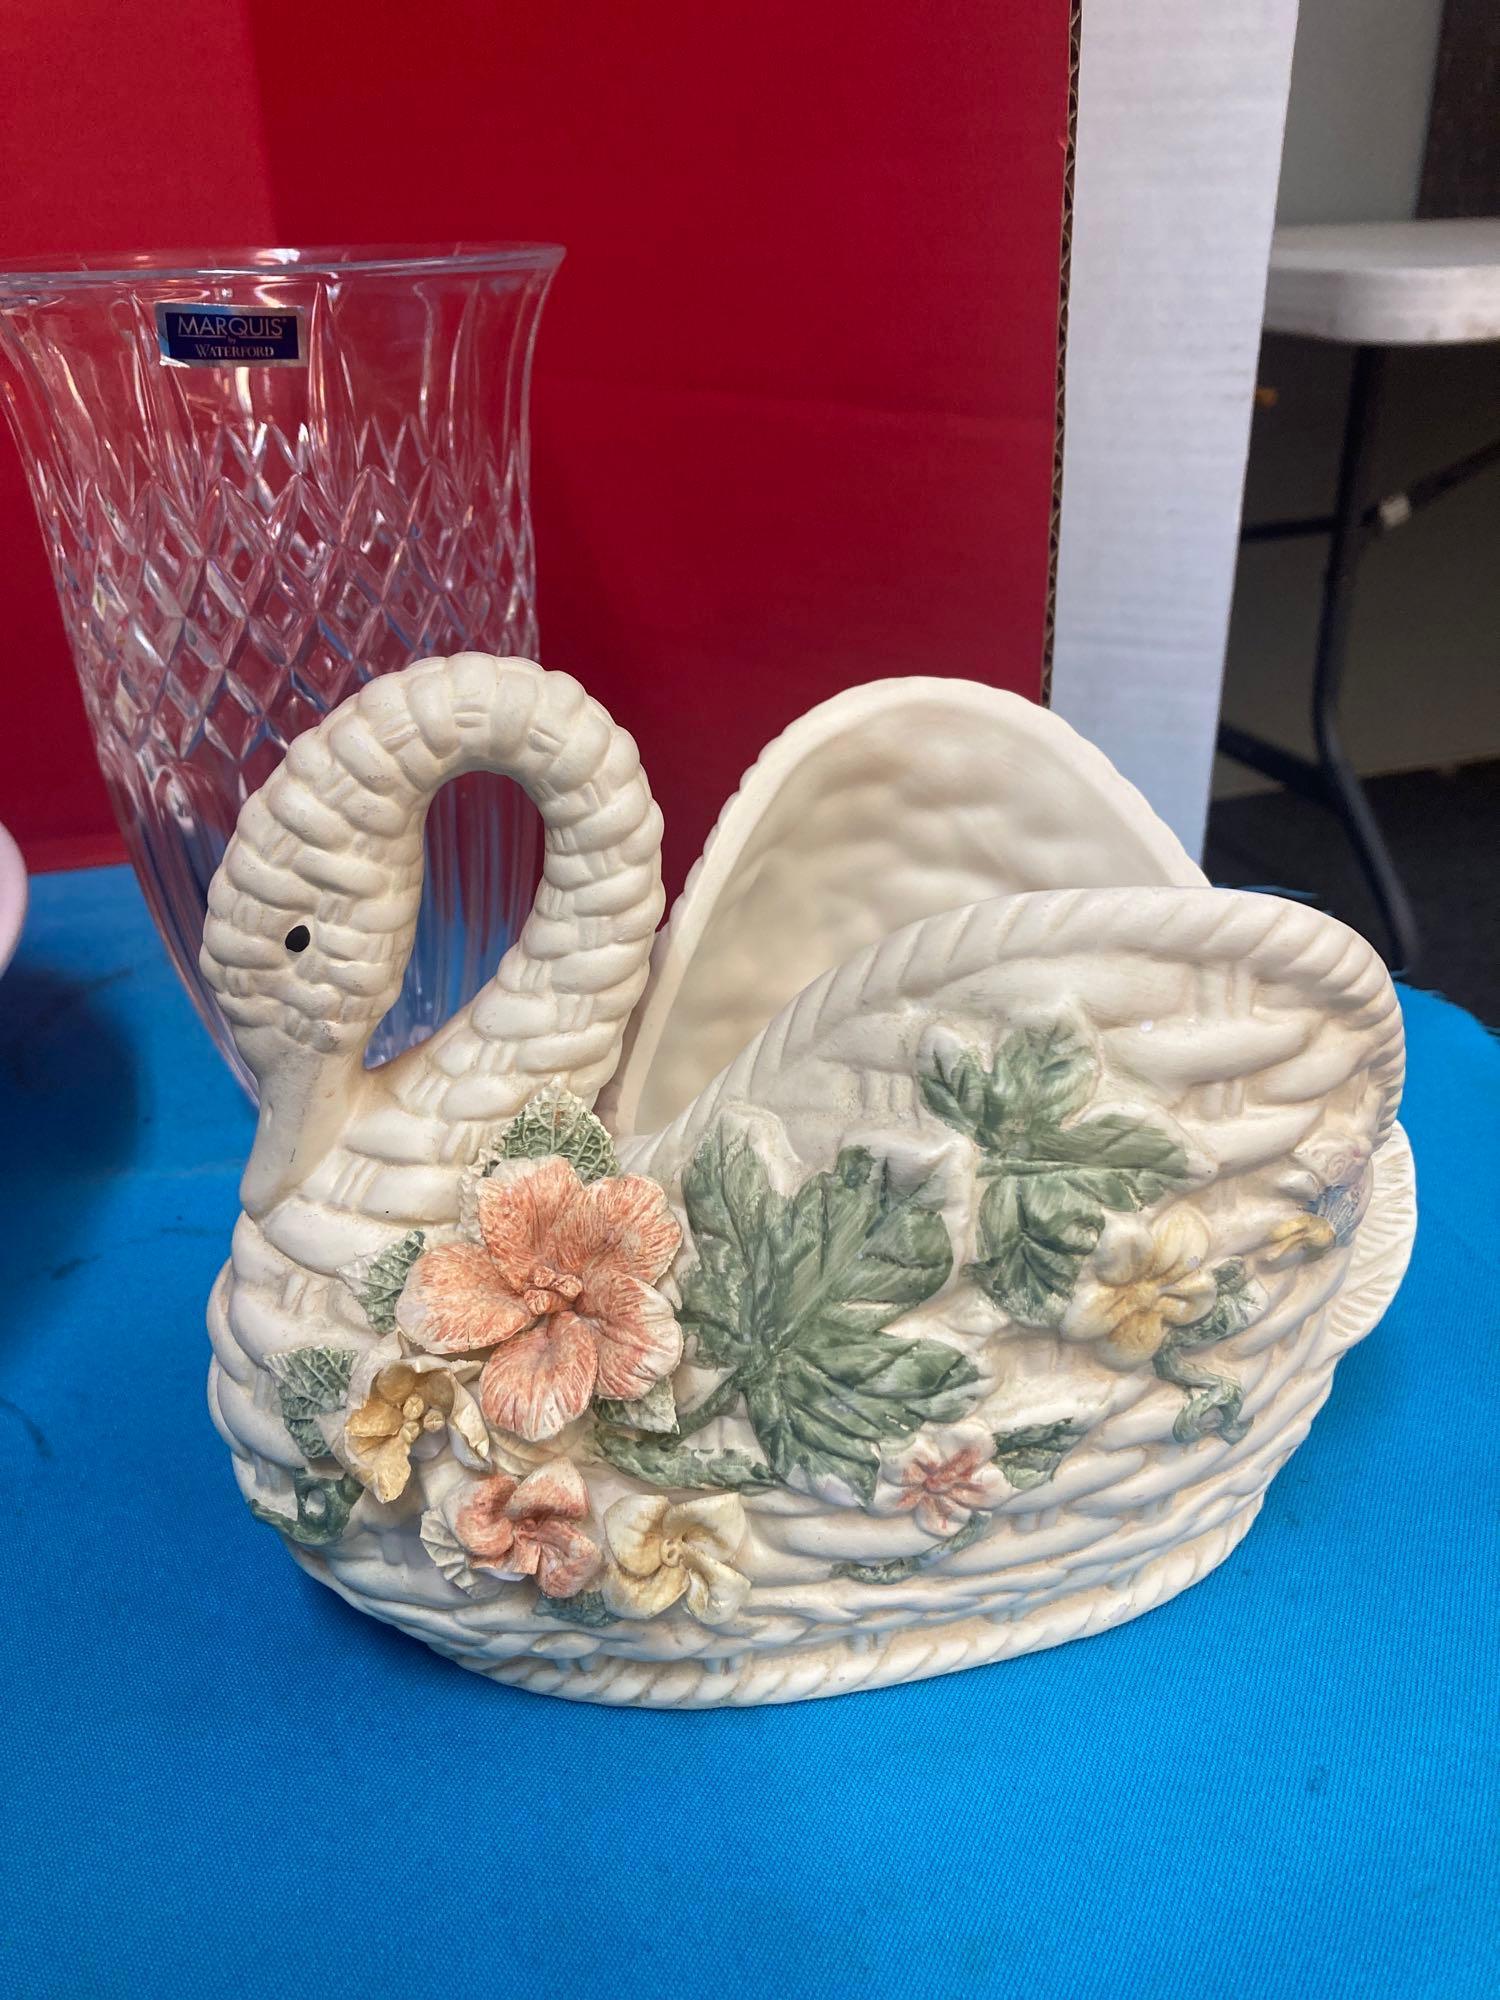 Waterford vase, porcelain bowl, other ceramics